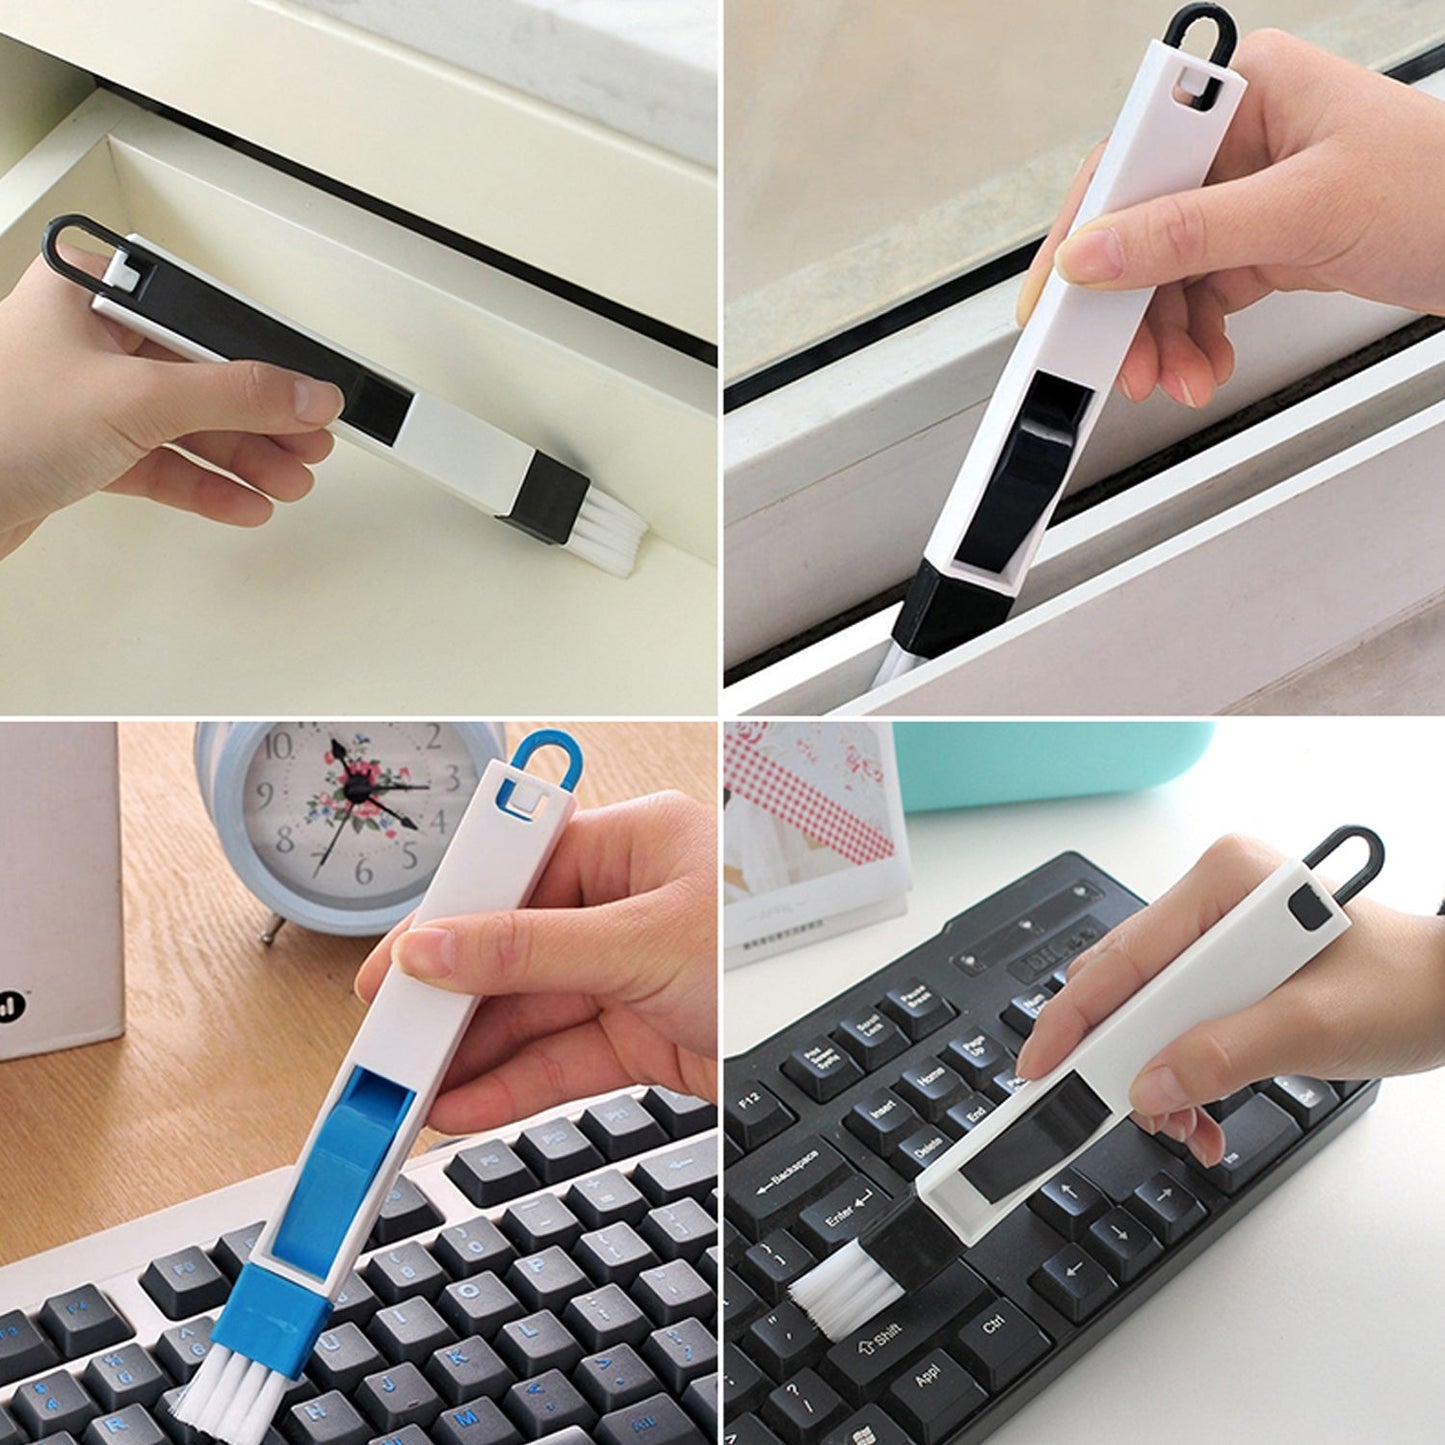 0850 2 in 1 Multi-Function Plastic Window Slot Keyboard Wardrobe Dust Removal Cleaning Brush